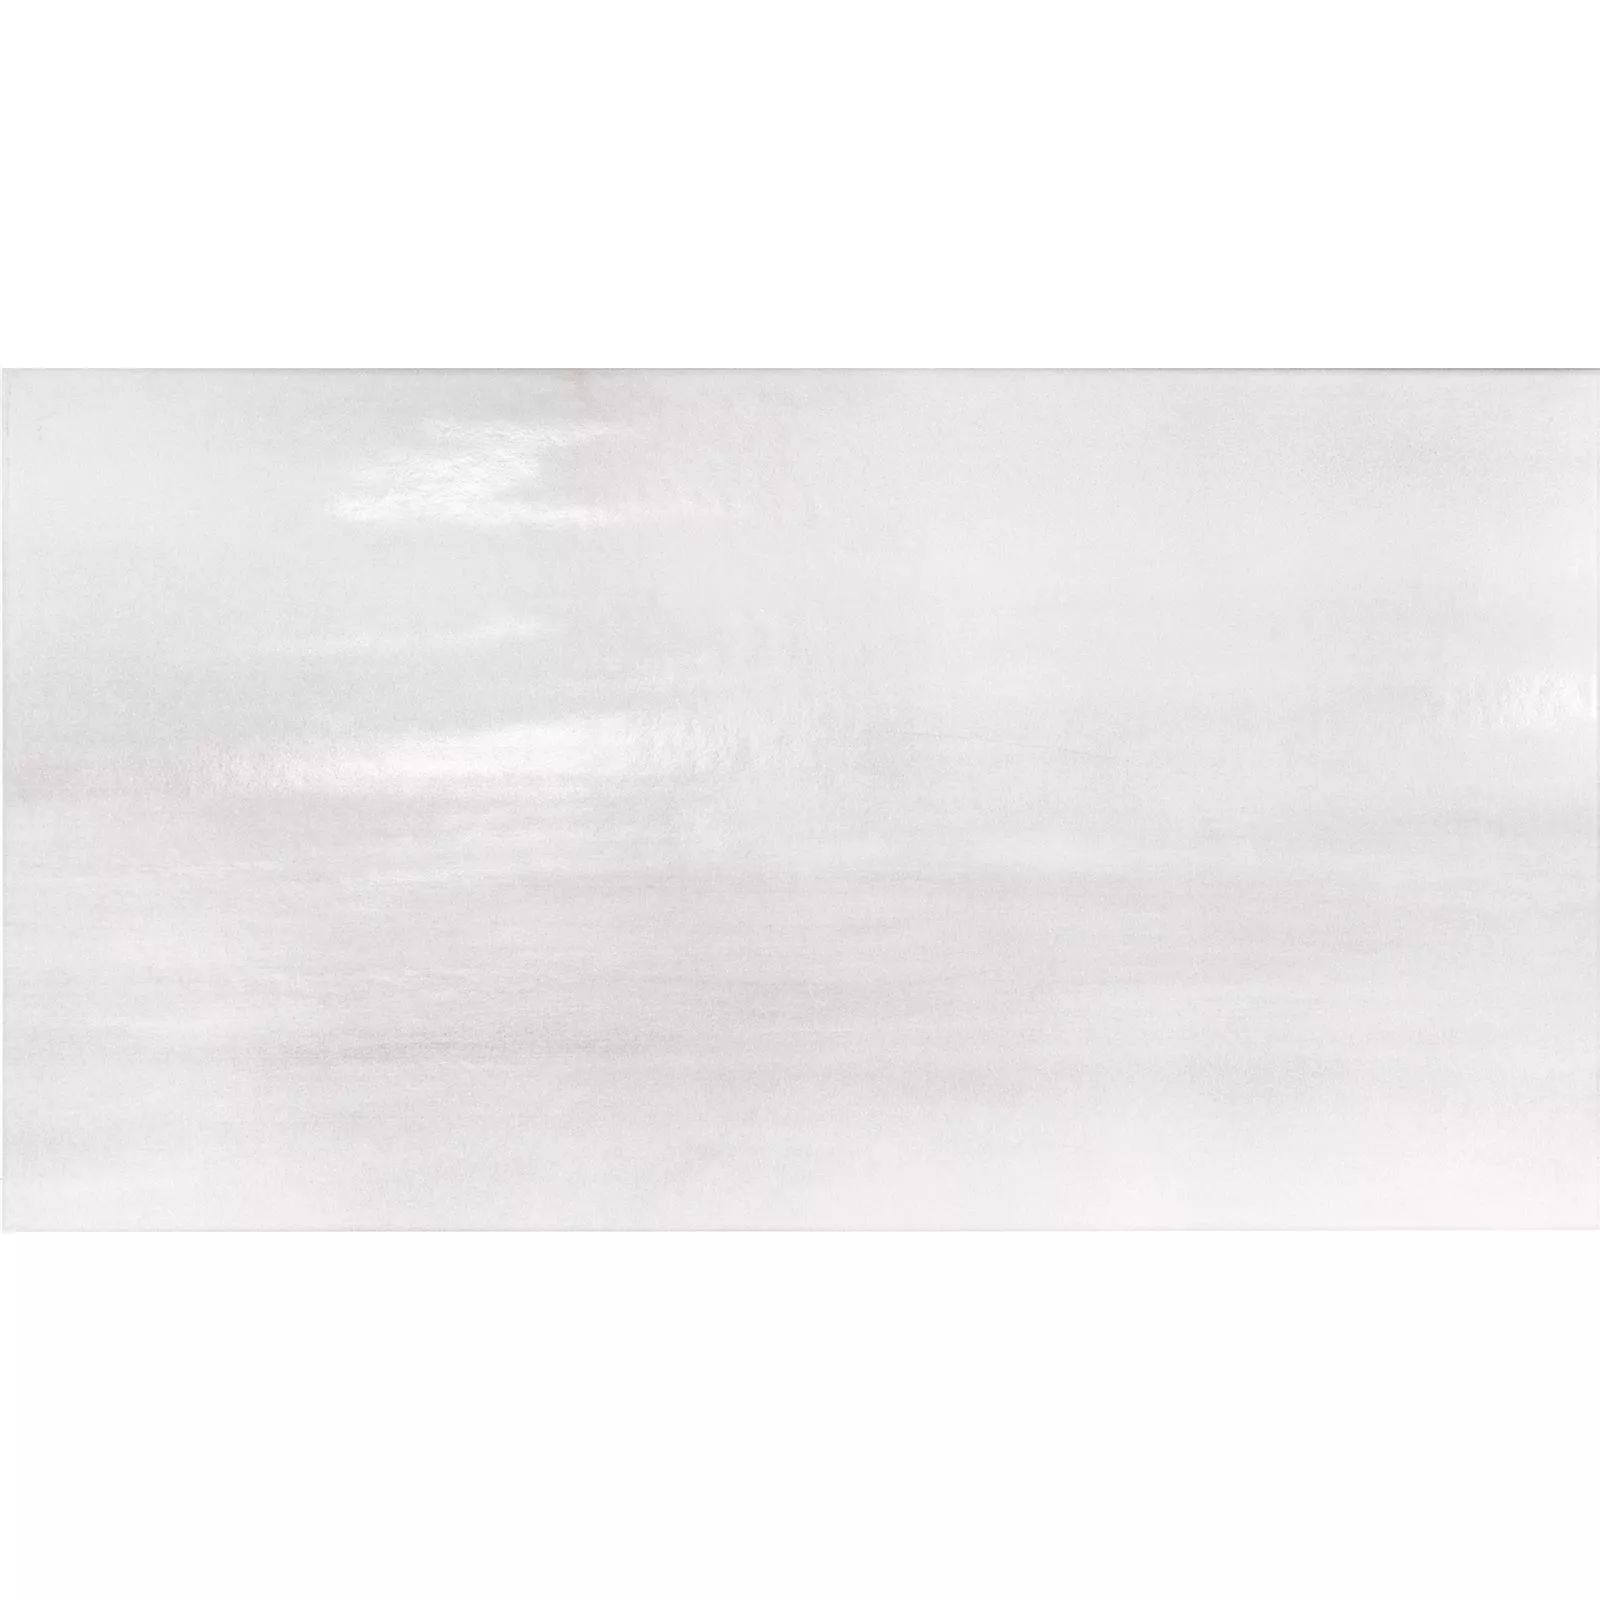 Nástěnné Obklady Friedrich Kamenný mat Bílá 30x60cm